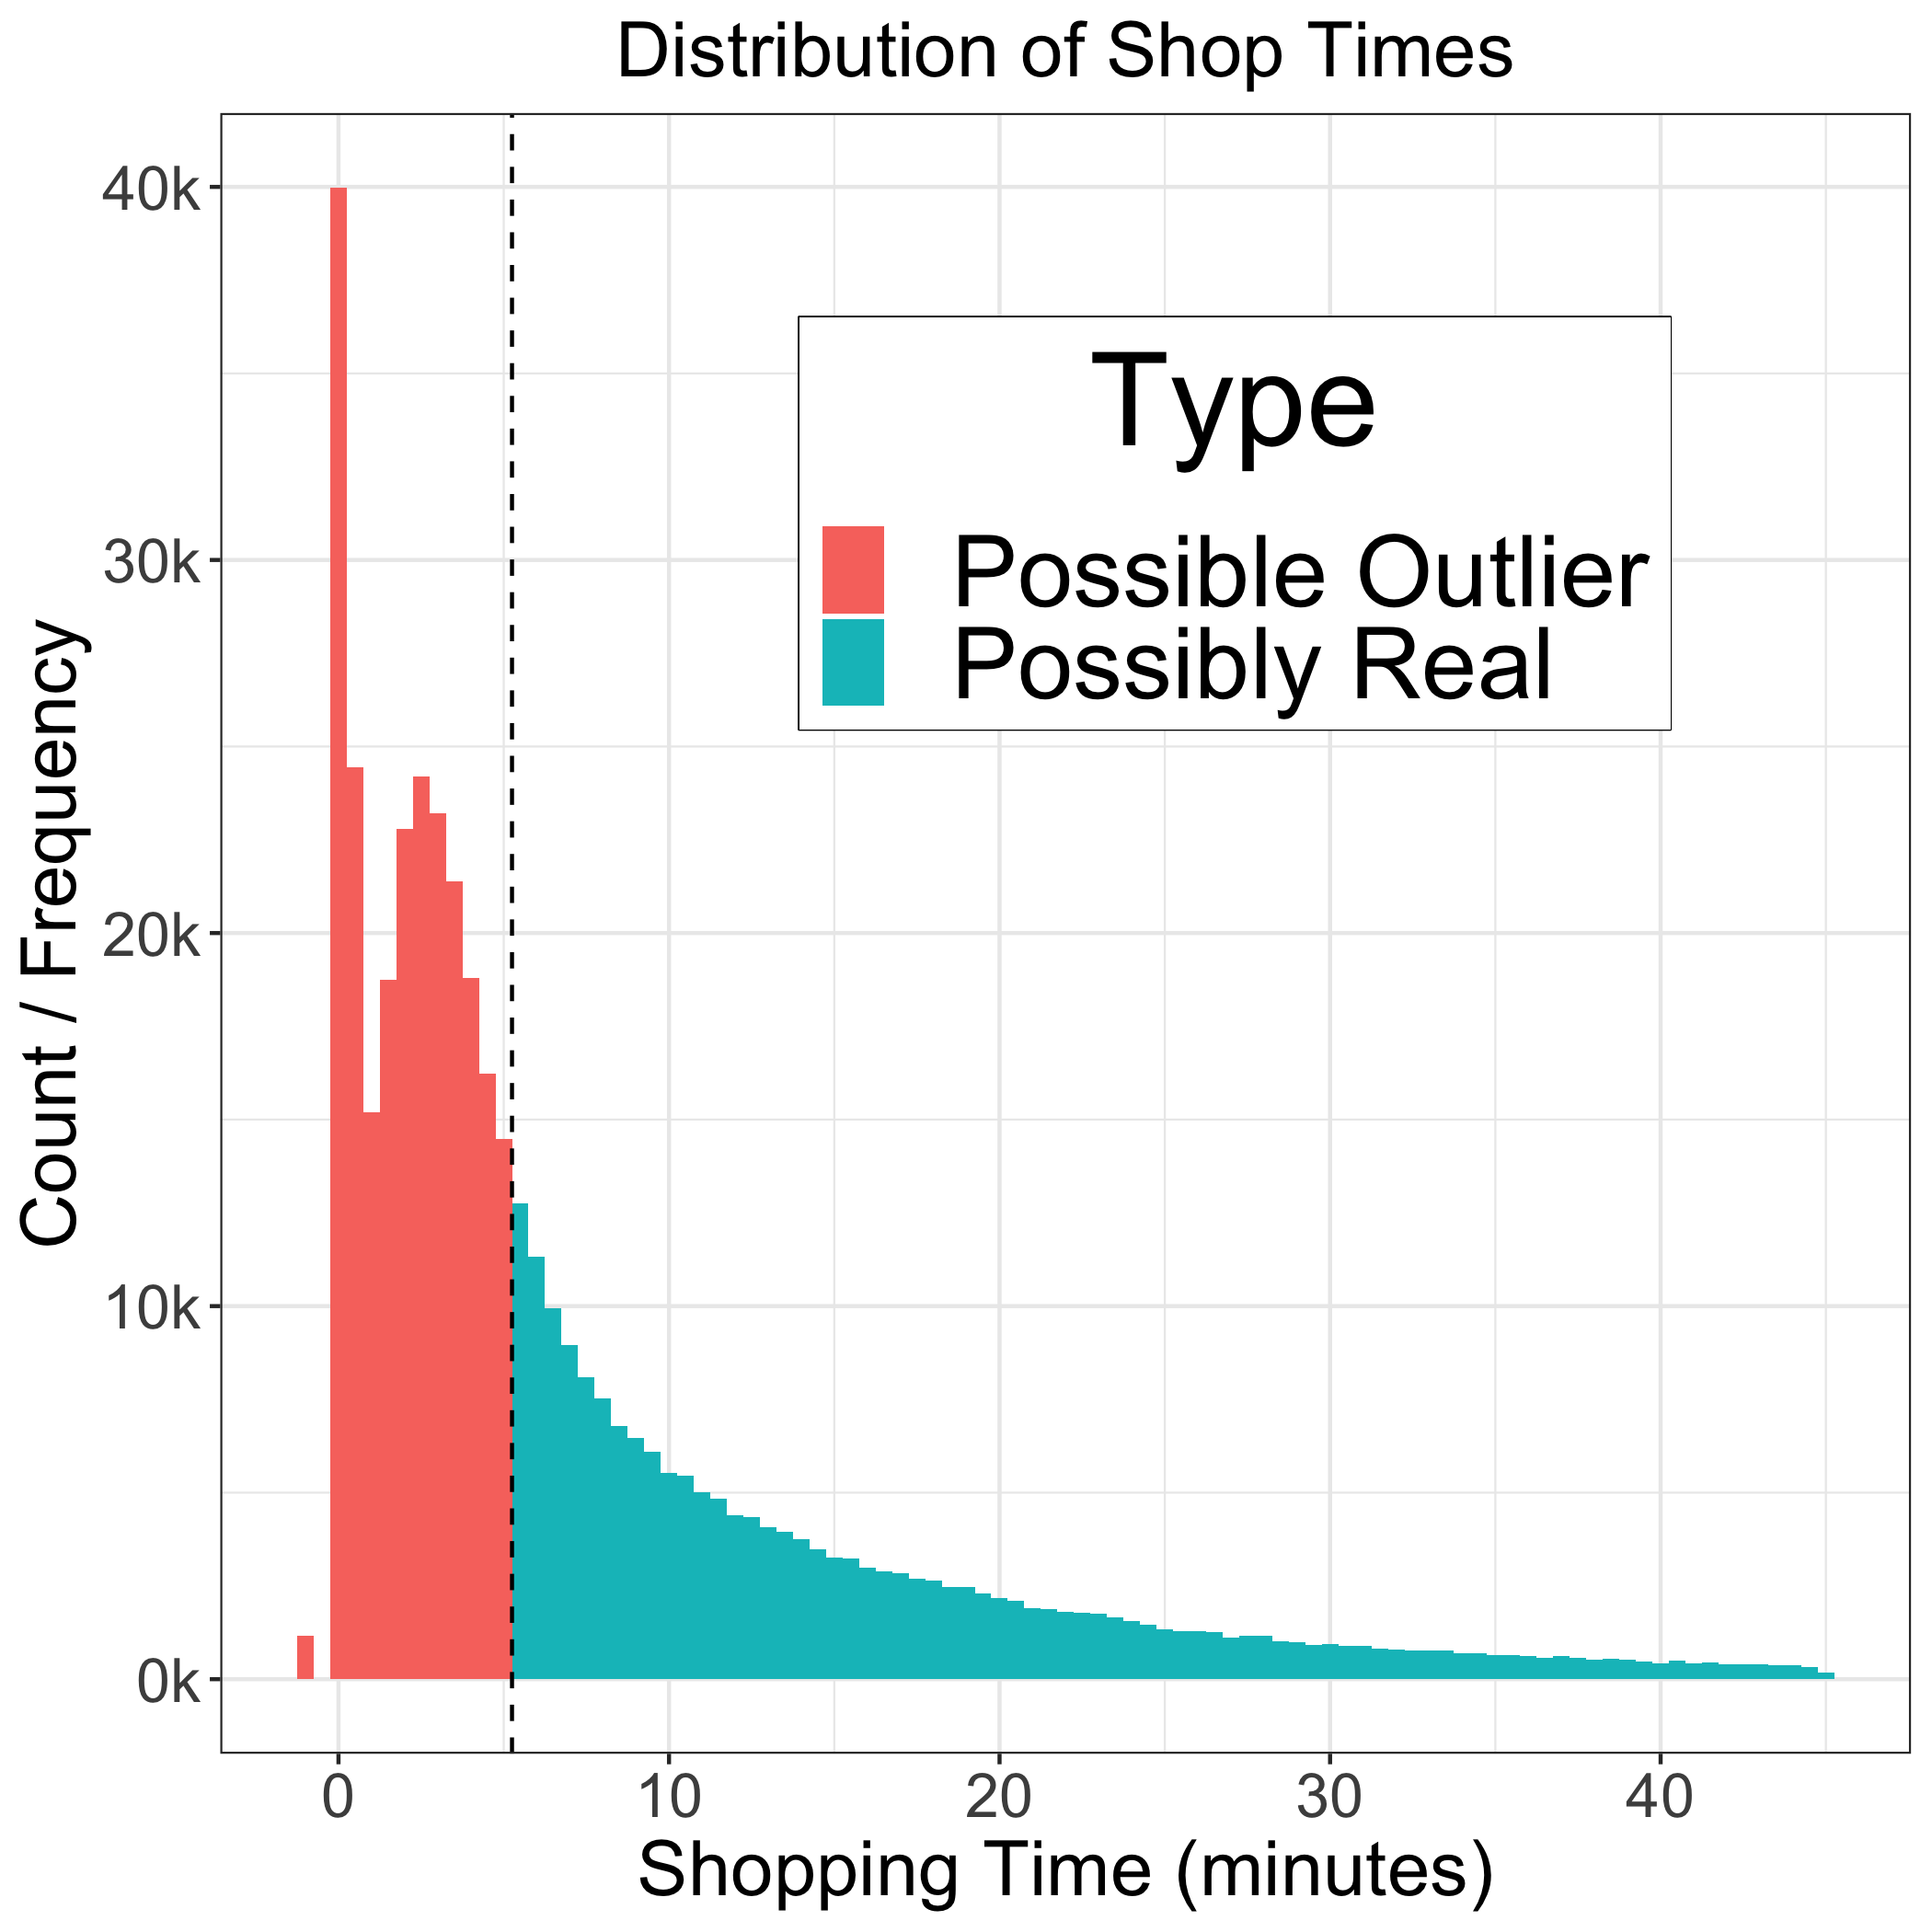 Our database captured hundreds of zero or negative shop times.